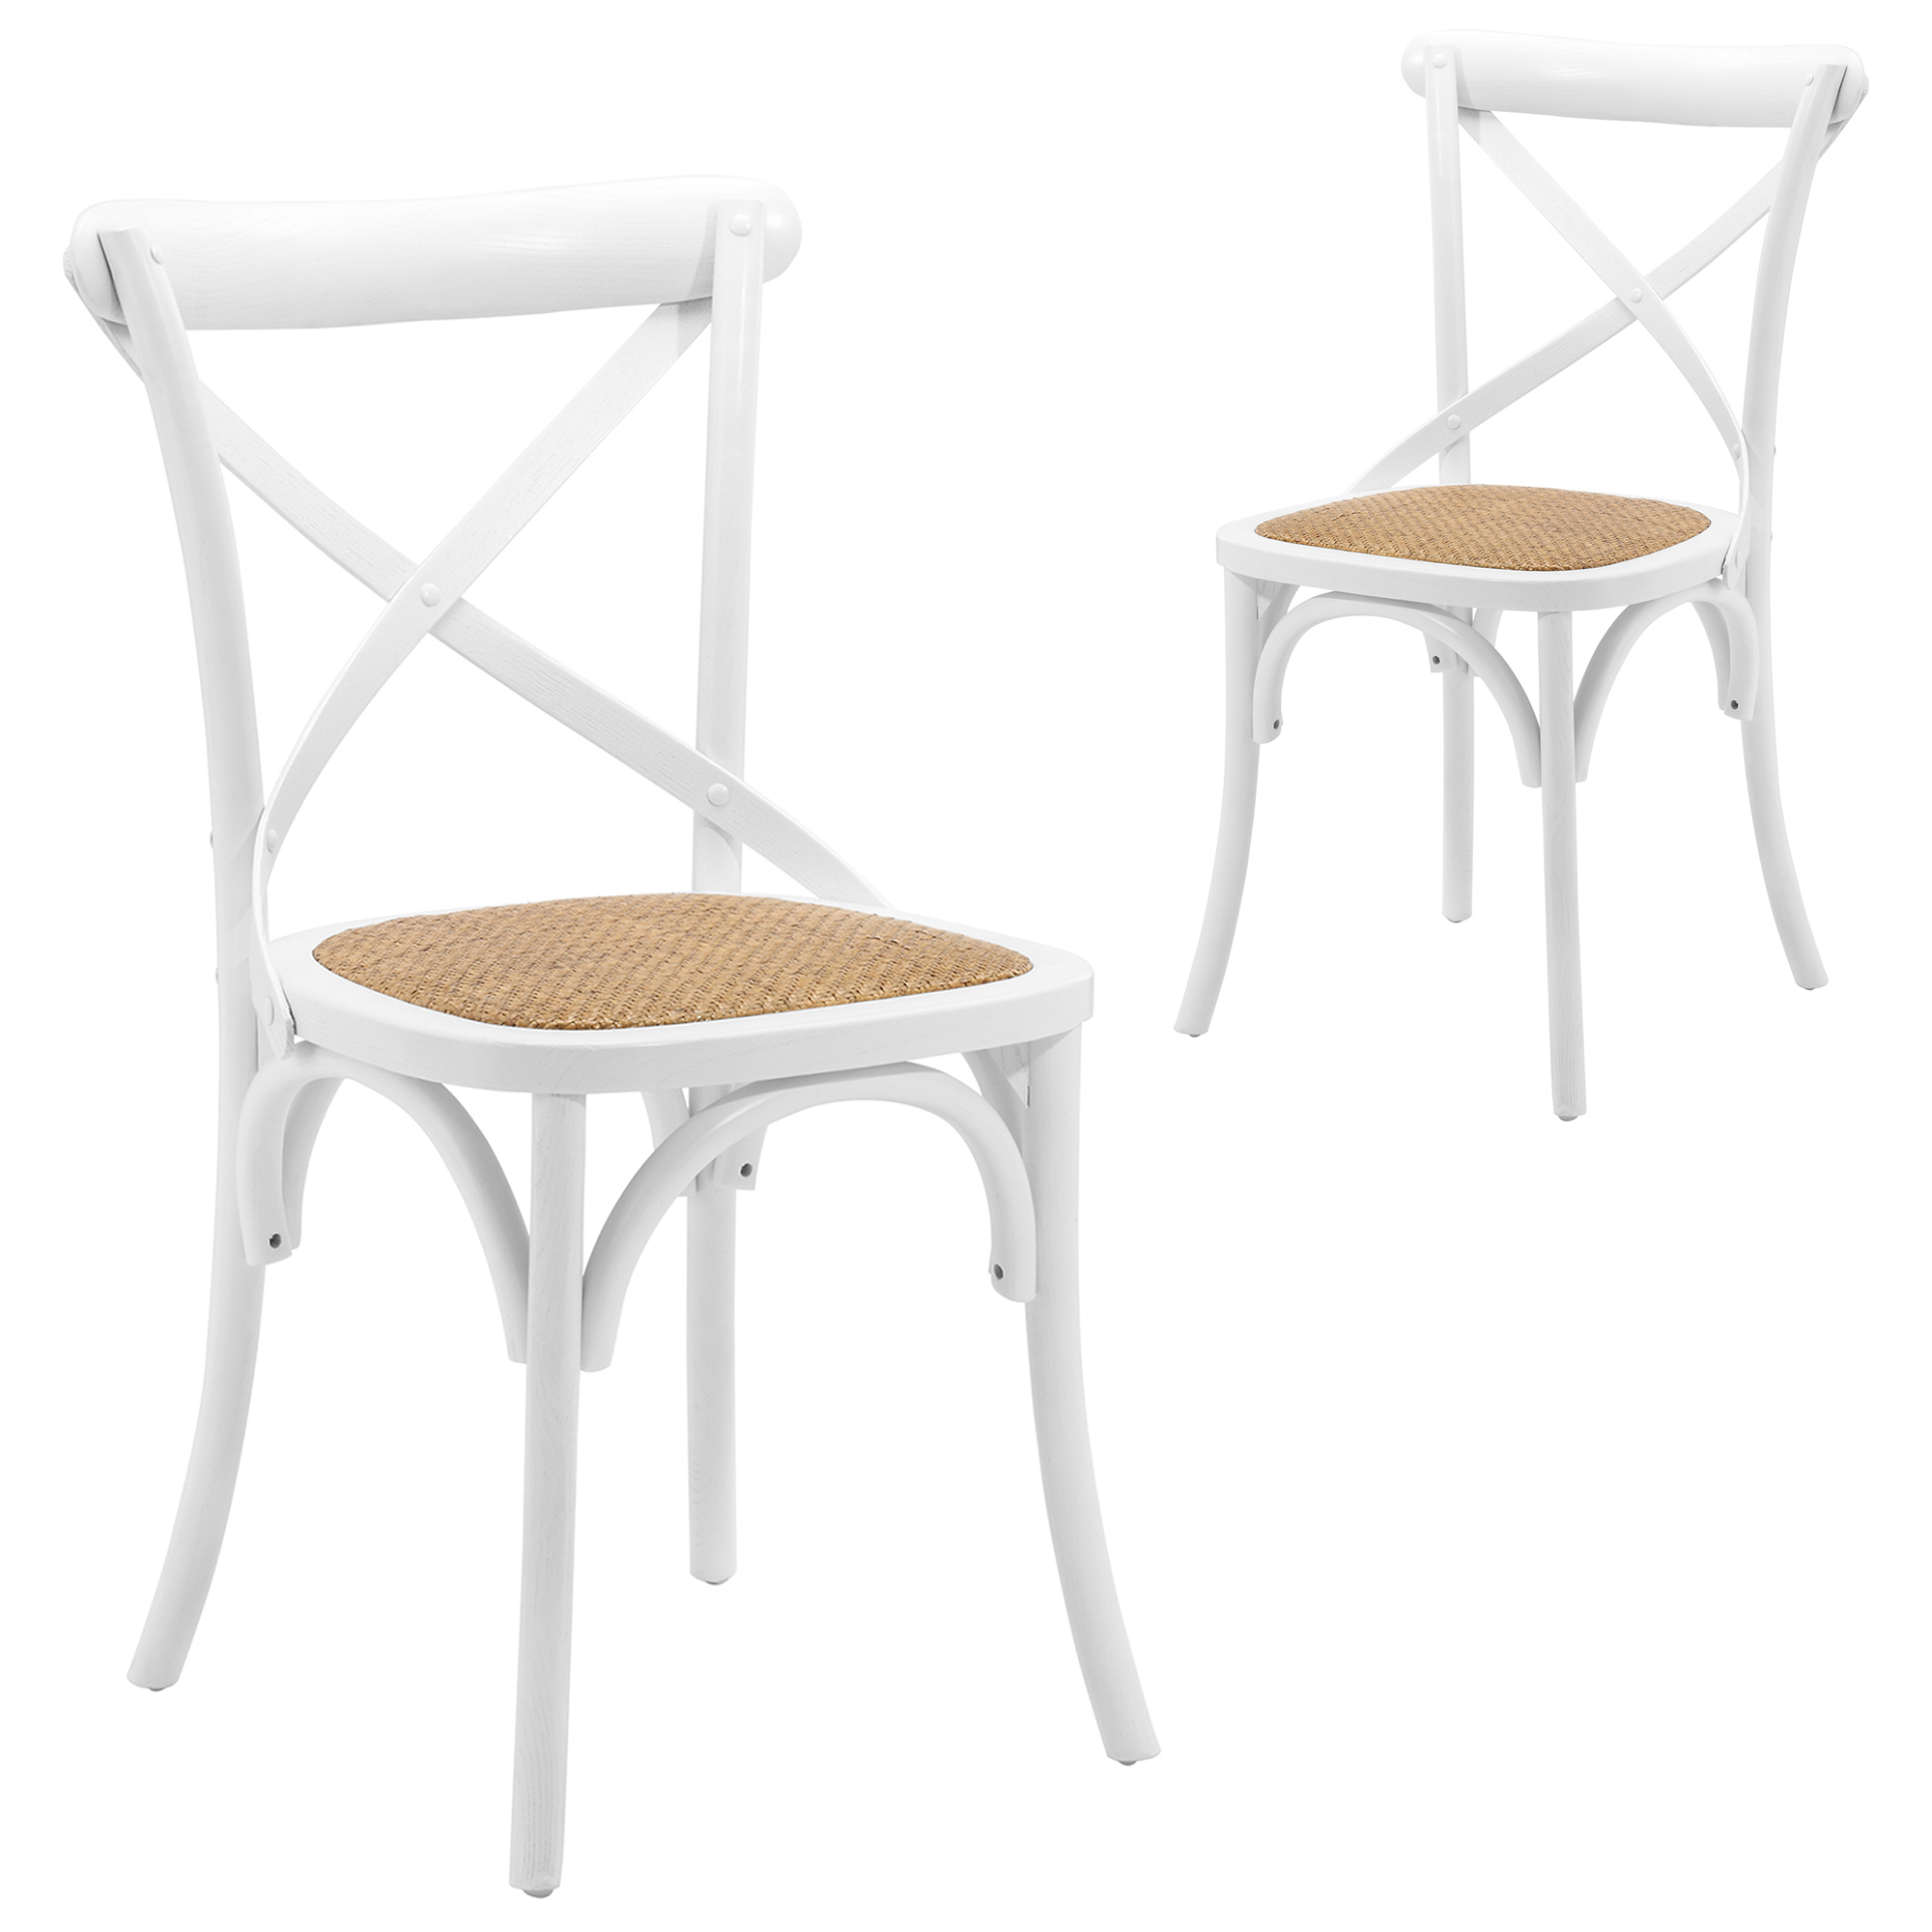 Otis Chair Bella Casa Dining Chairs For Sale Online Ebay